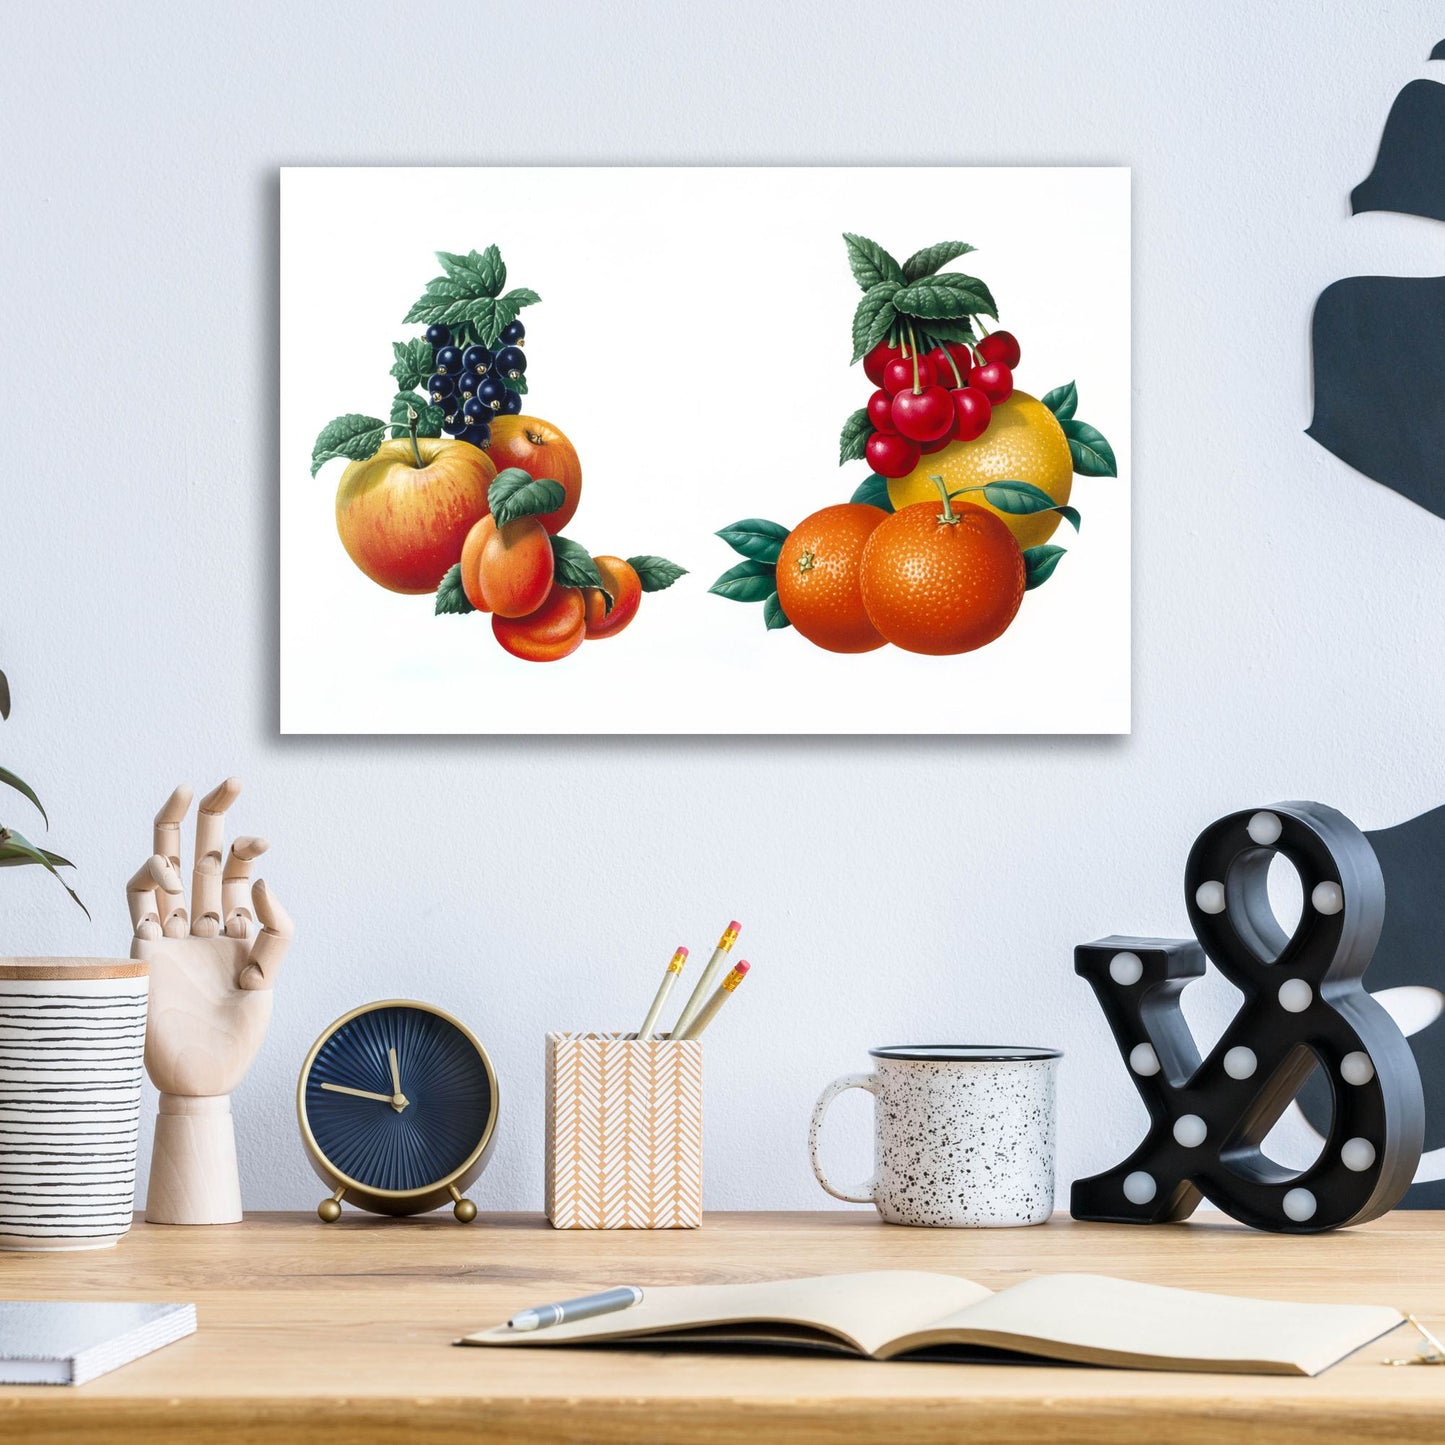 Epic Art 'Fruit 3' by Harro Maass, Acrylic Glass Wall Art,16x12